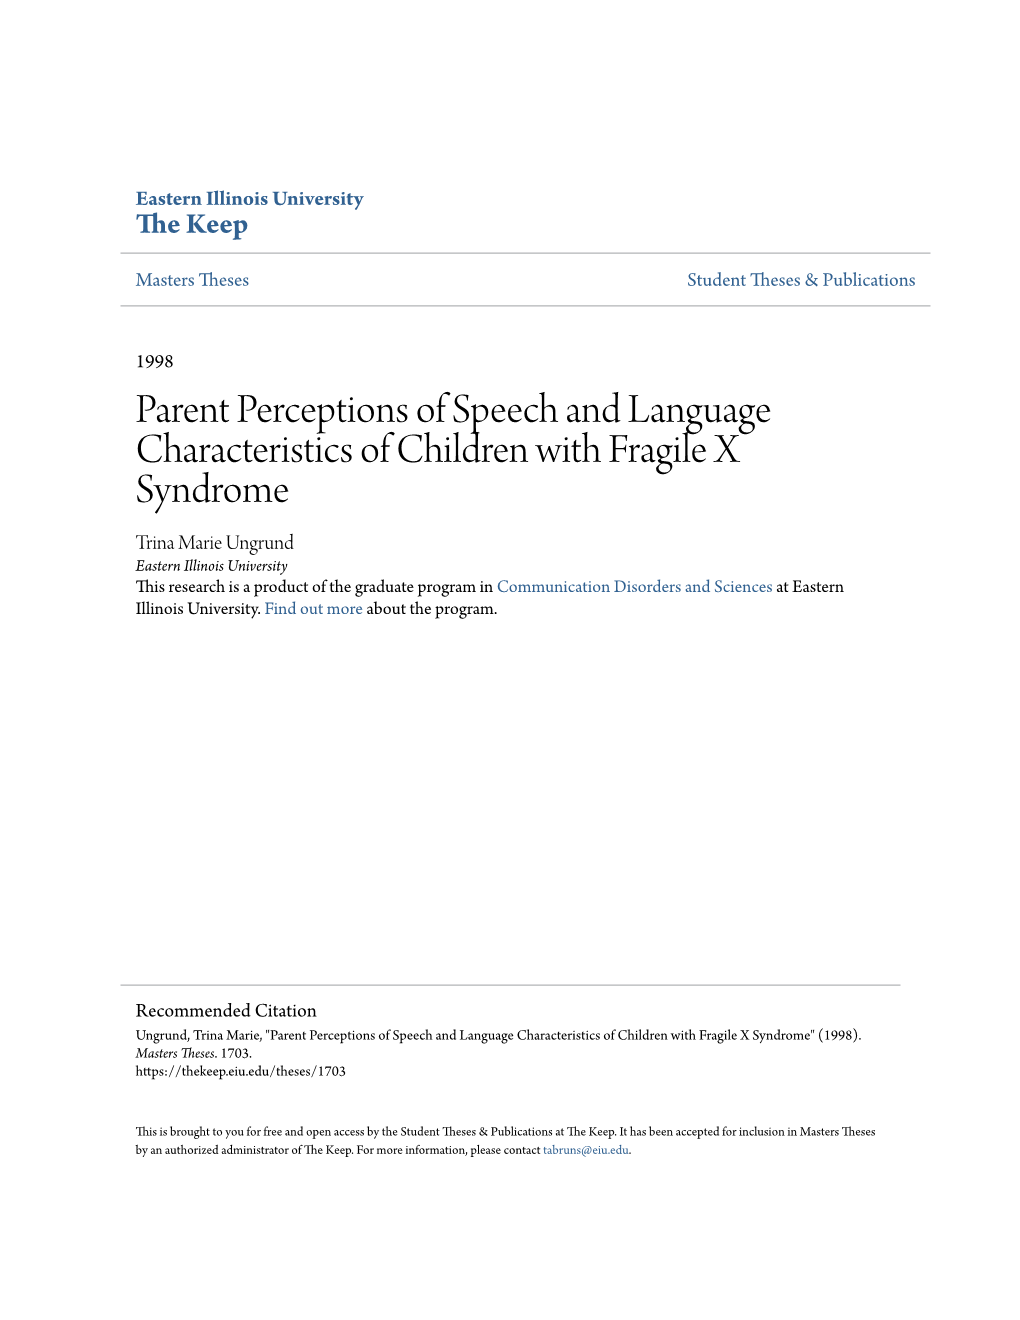 Parent Perceptions of Speech and Language Characteristics Of